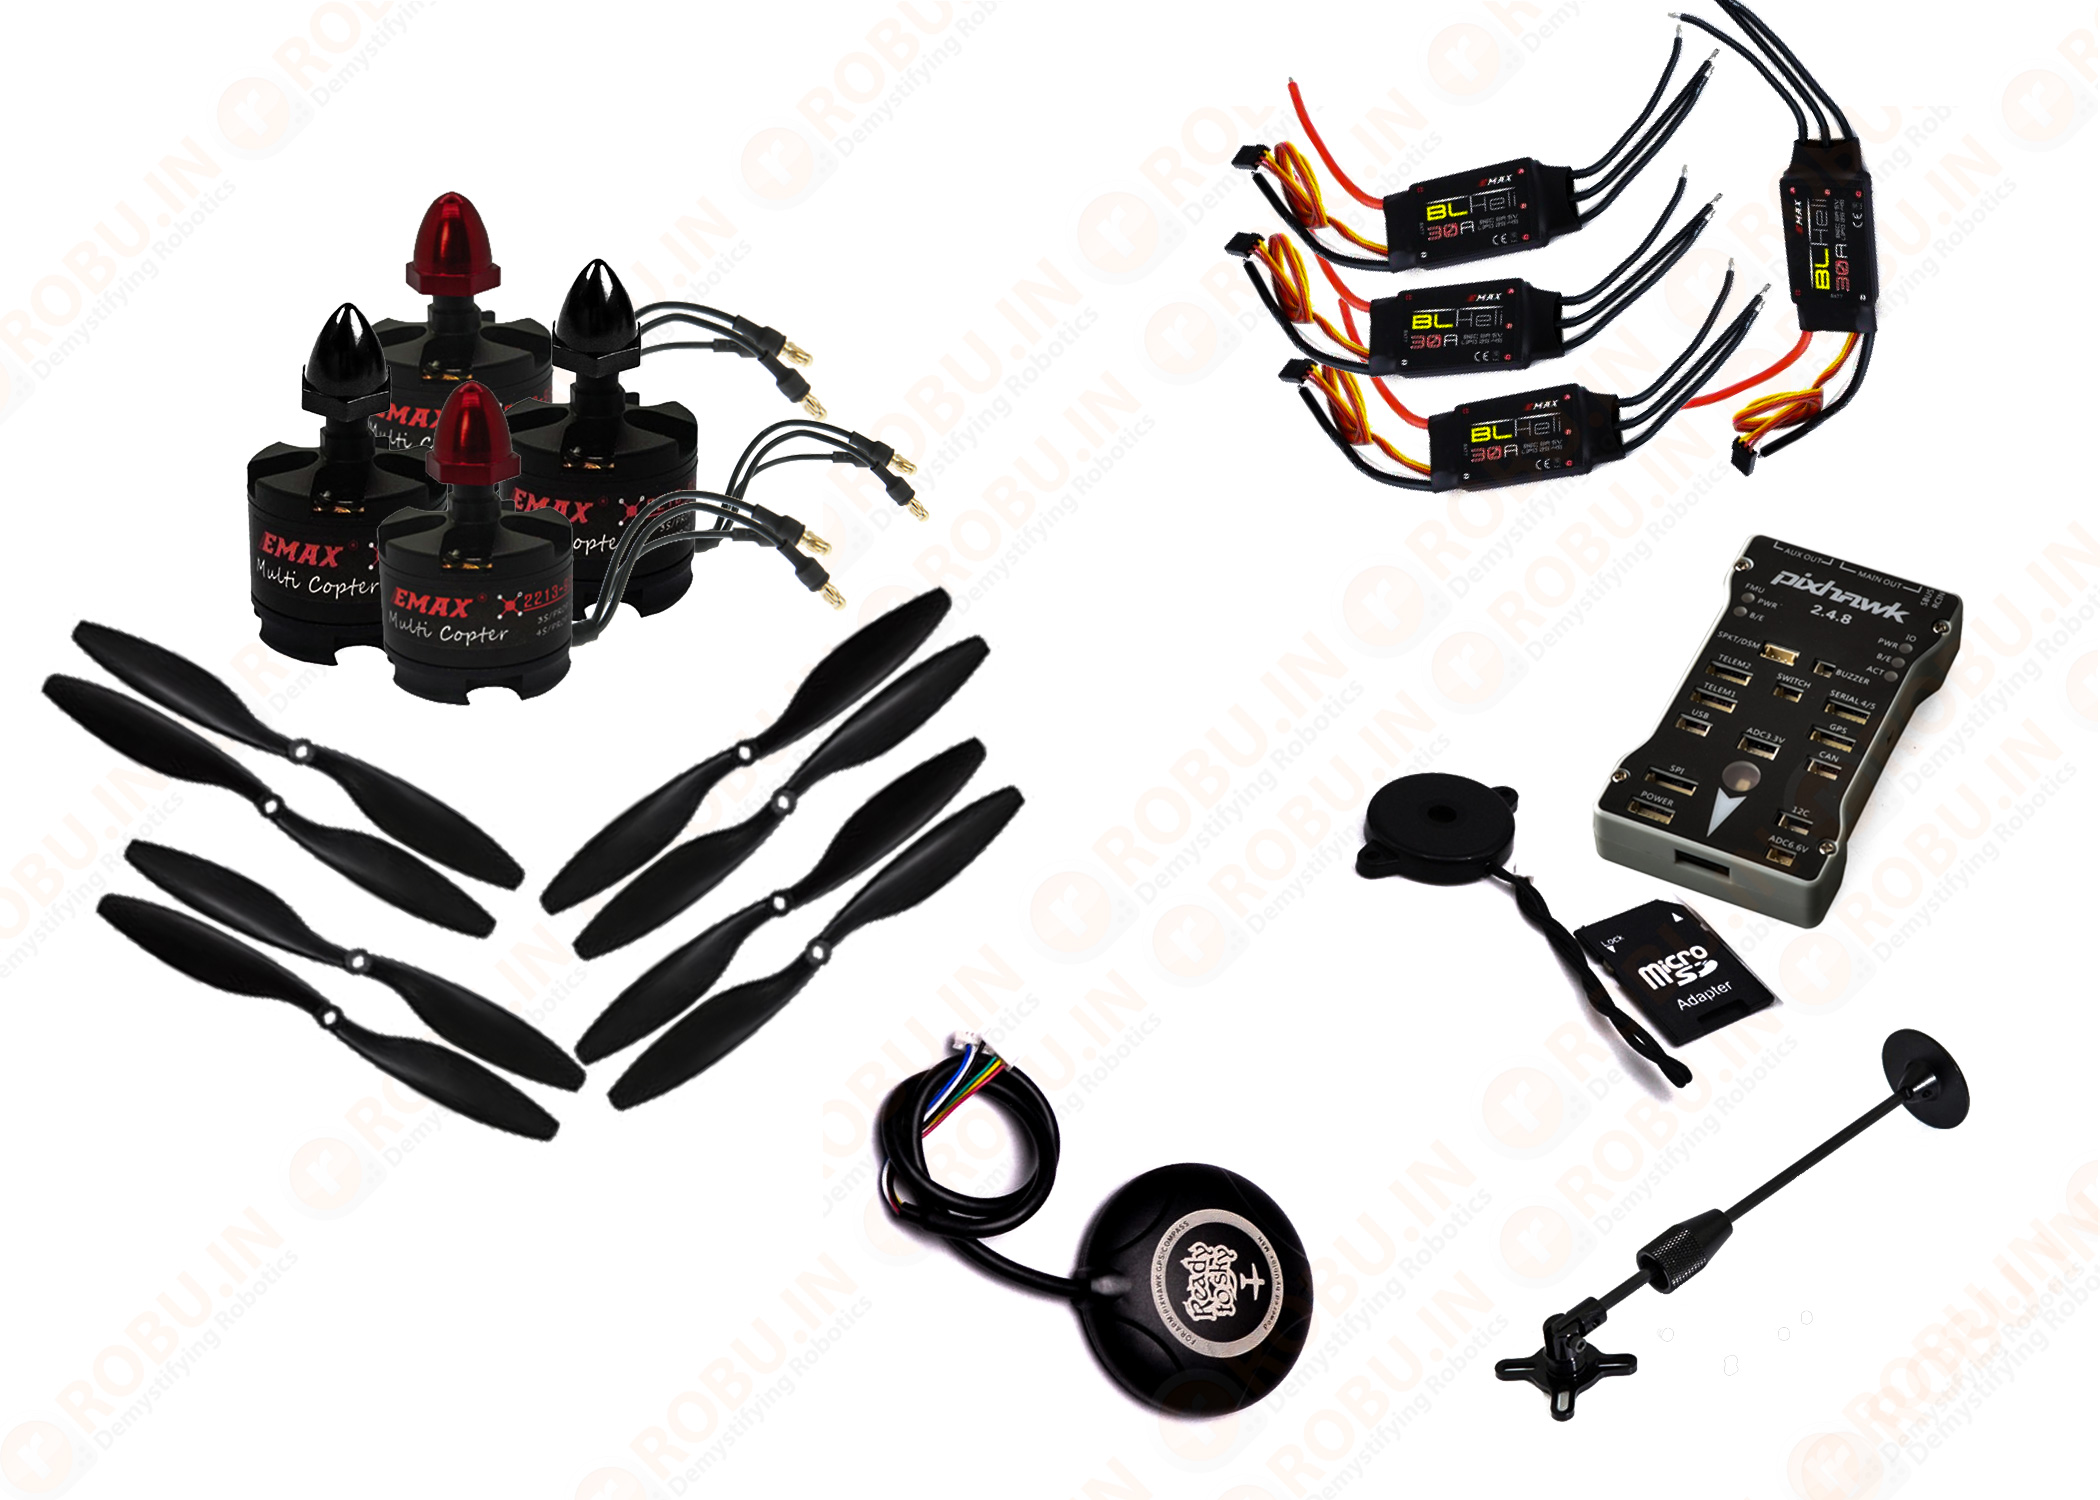 Quadcopter Kit: Buy ARF Quadcopter Kit Advanced at Best Price